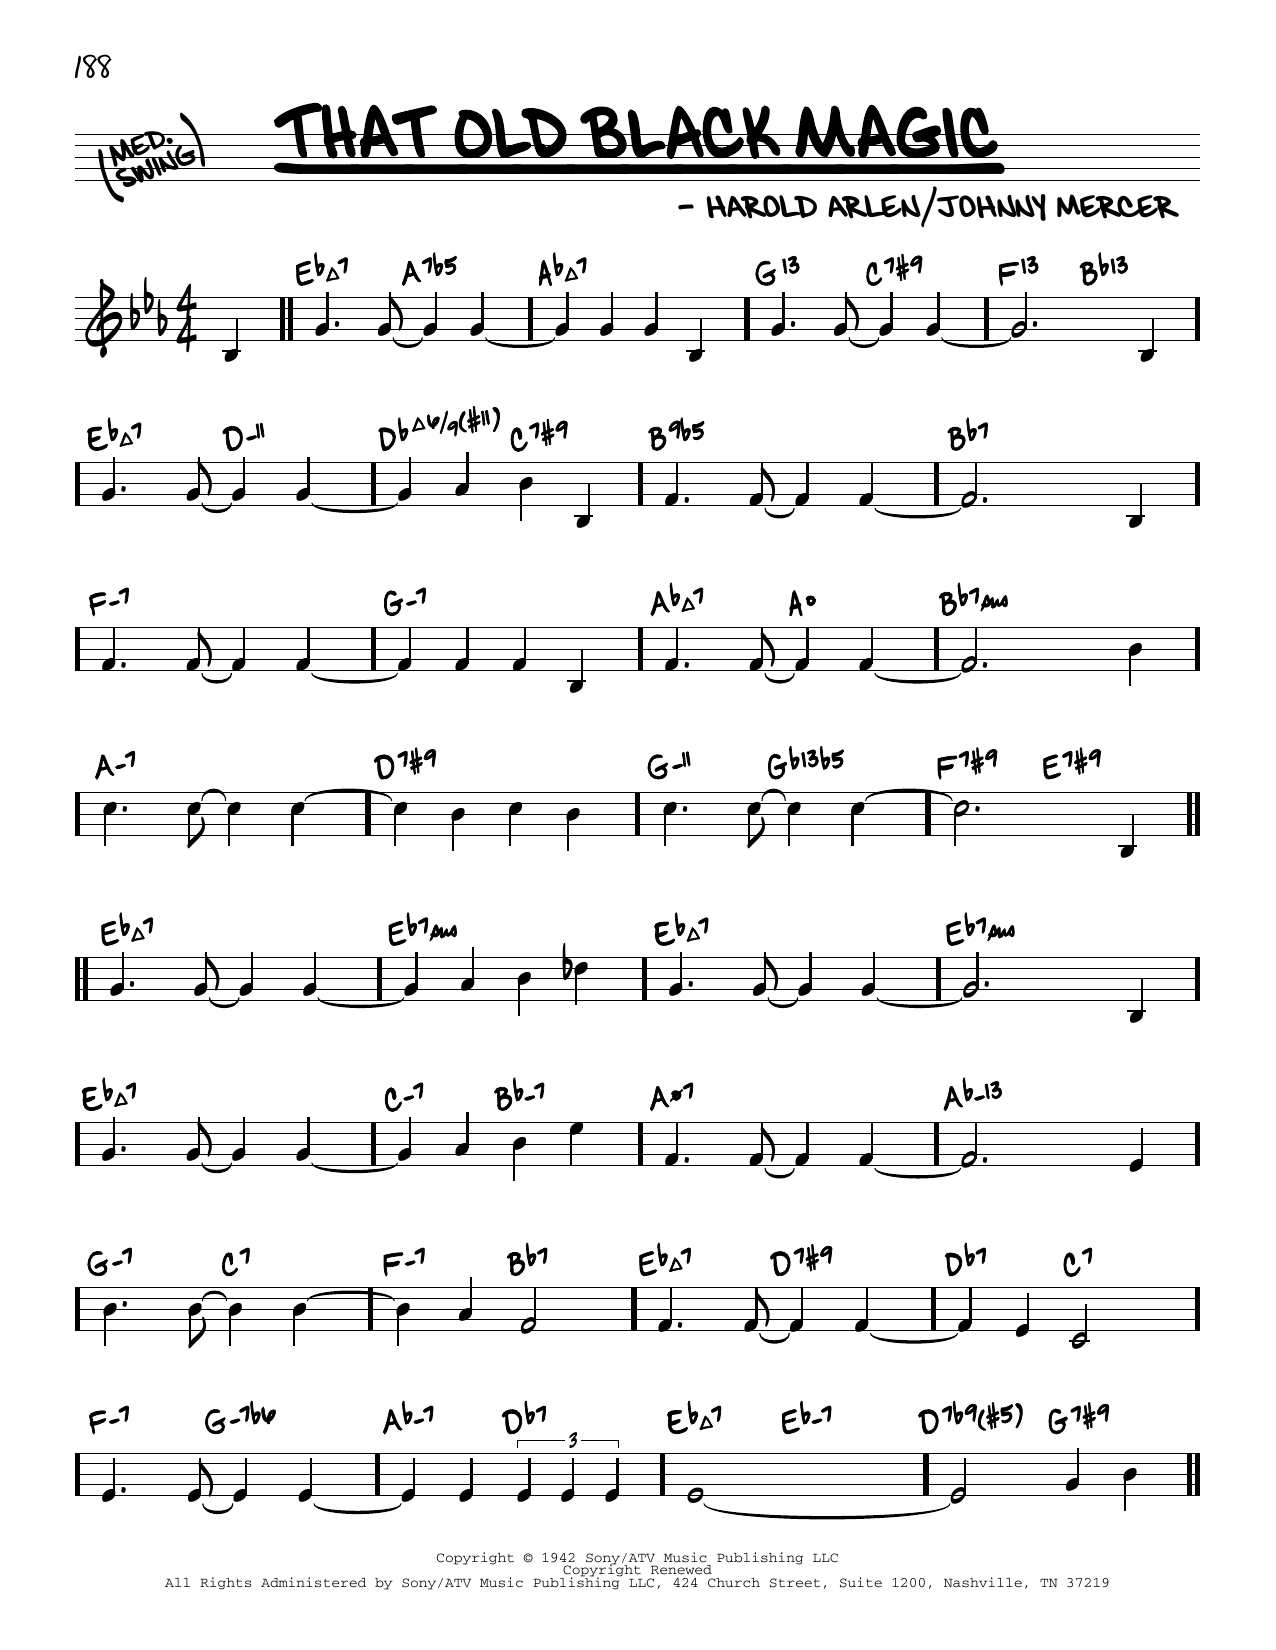 Harold Arlen That Old Black Magic (arr. David Hazeltine) Sheet Music Notes & Chords for Real Book – Enhanced Chords - Download or Print PDF